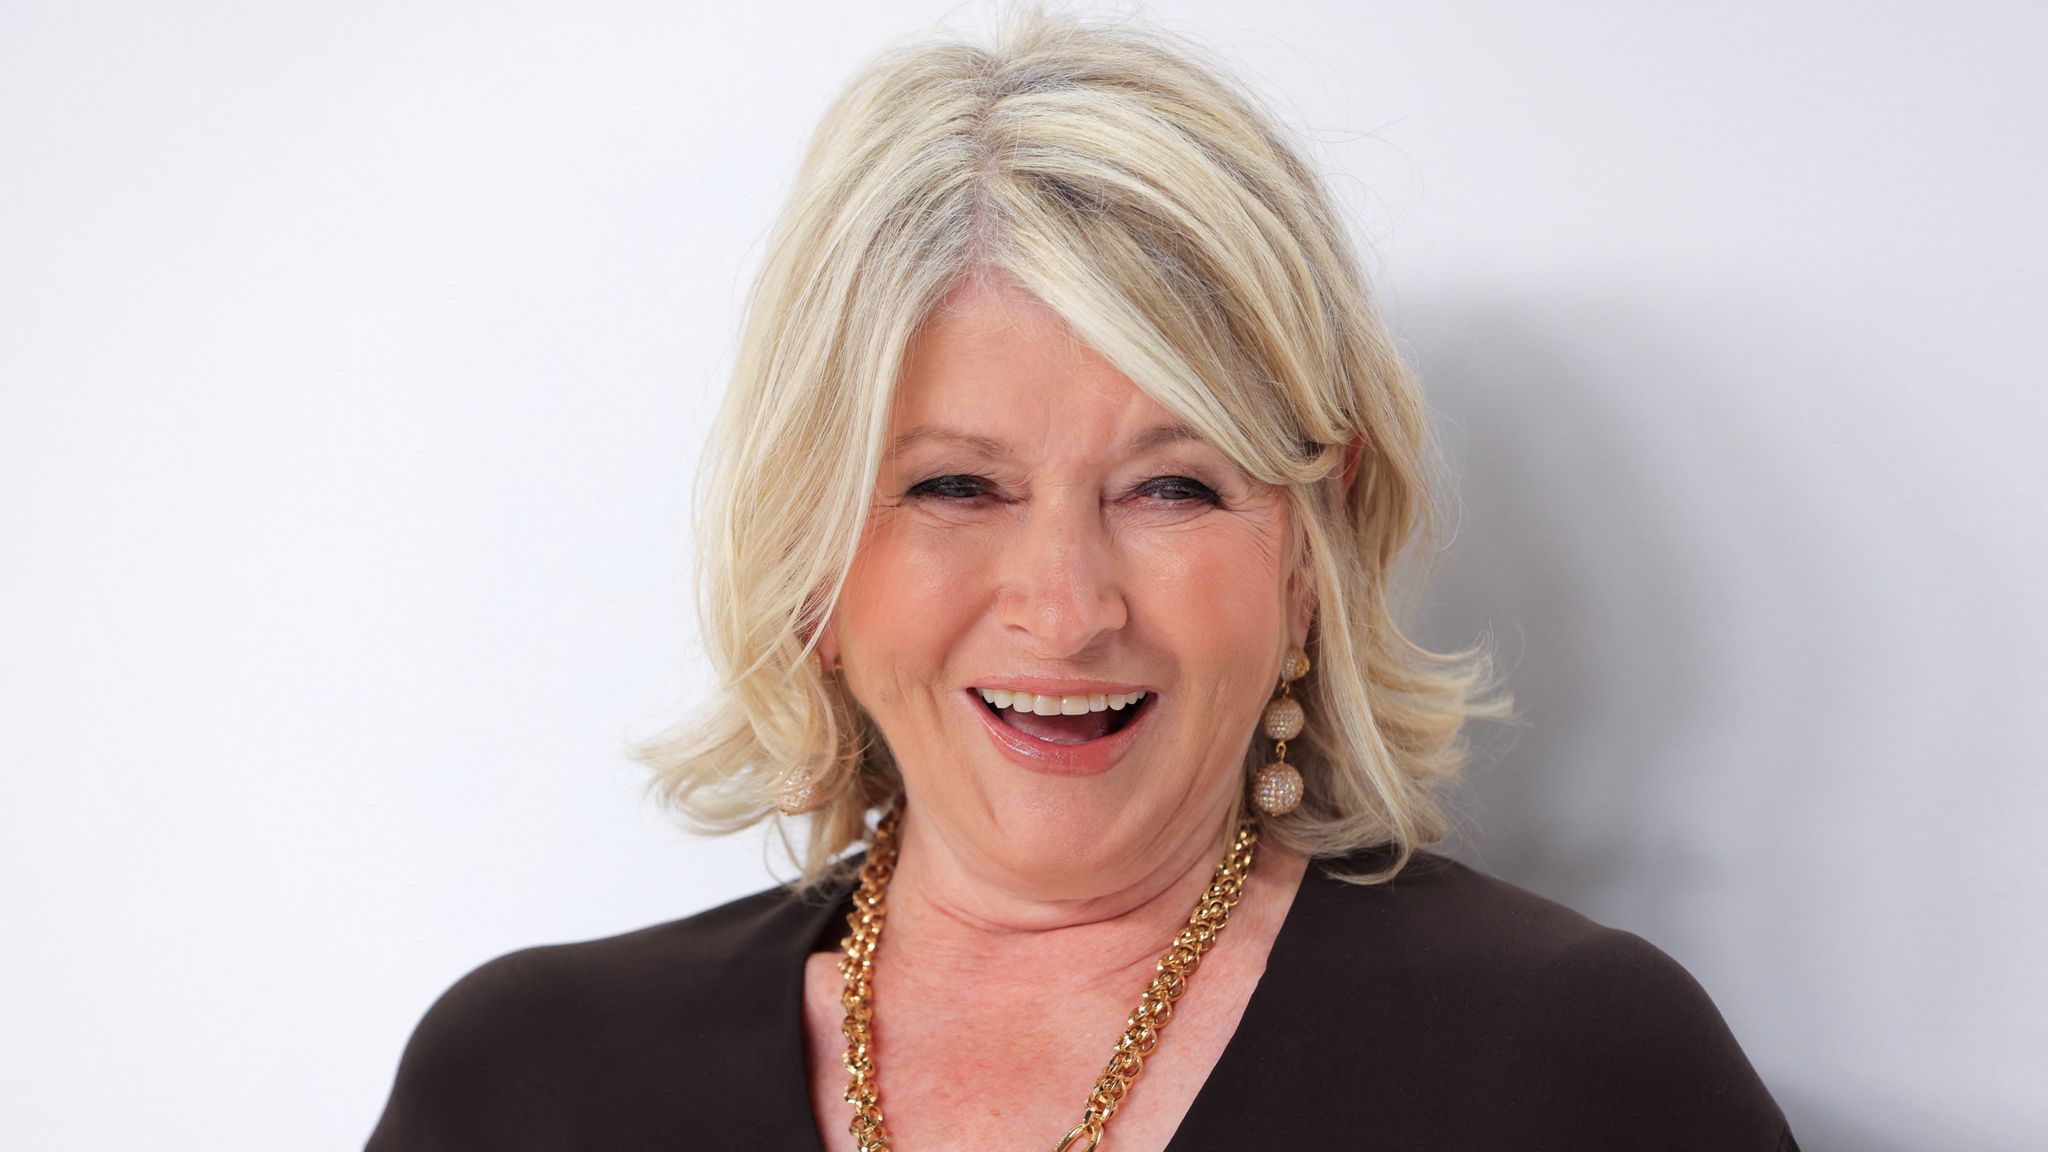 5 key life skills you can learn from Martha Stewart